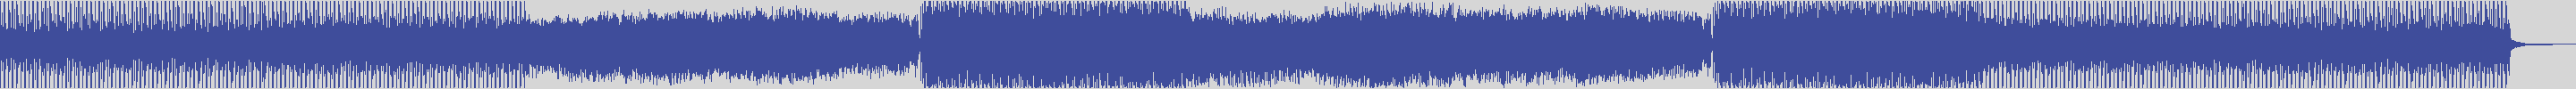 retroscena_records [RSR005] Dreams Key - Ibiza Sunset [Extended Mix] audio wave form